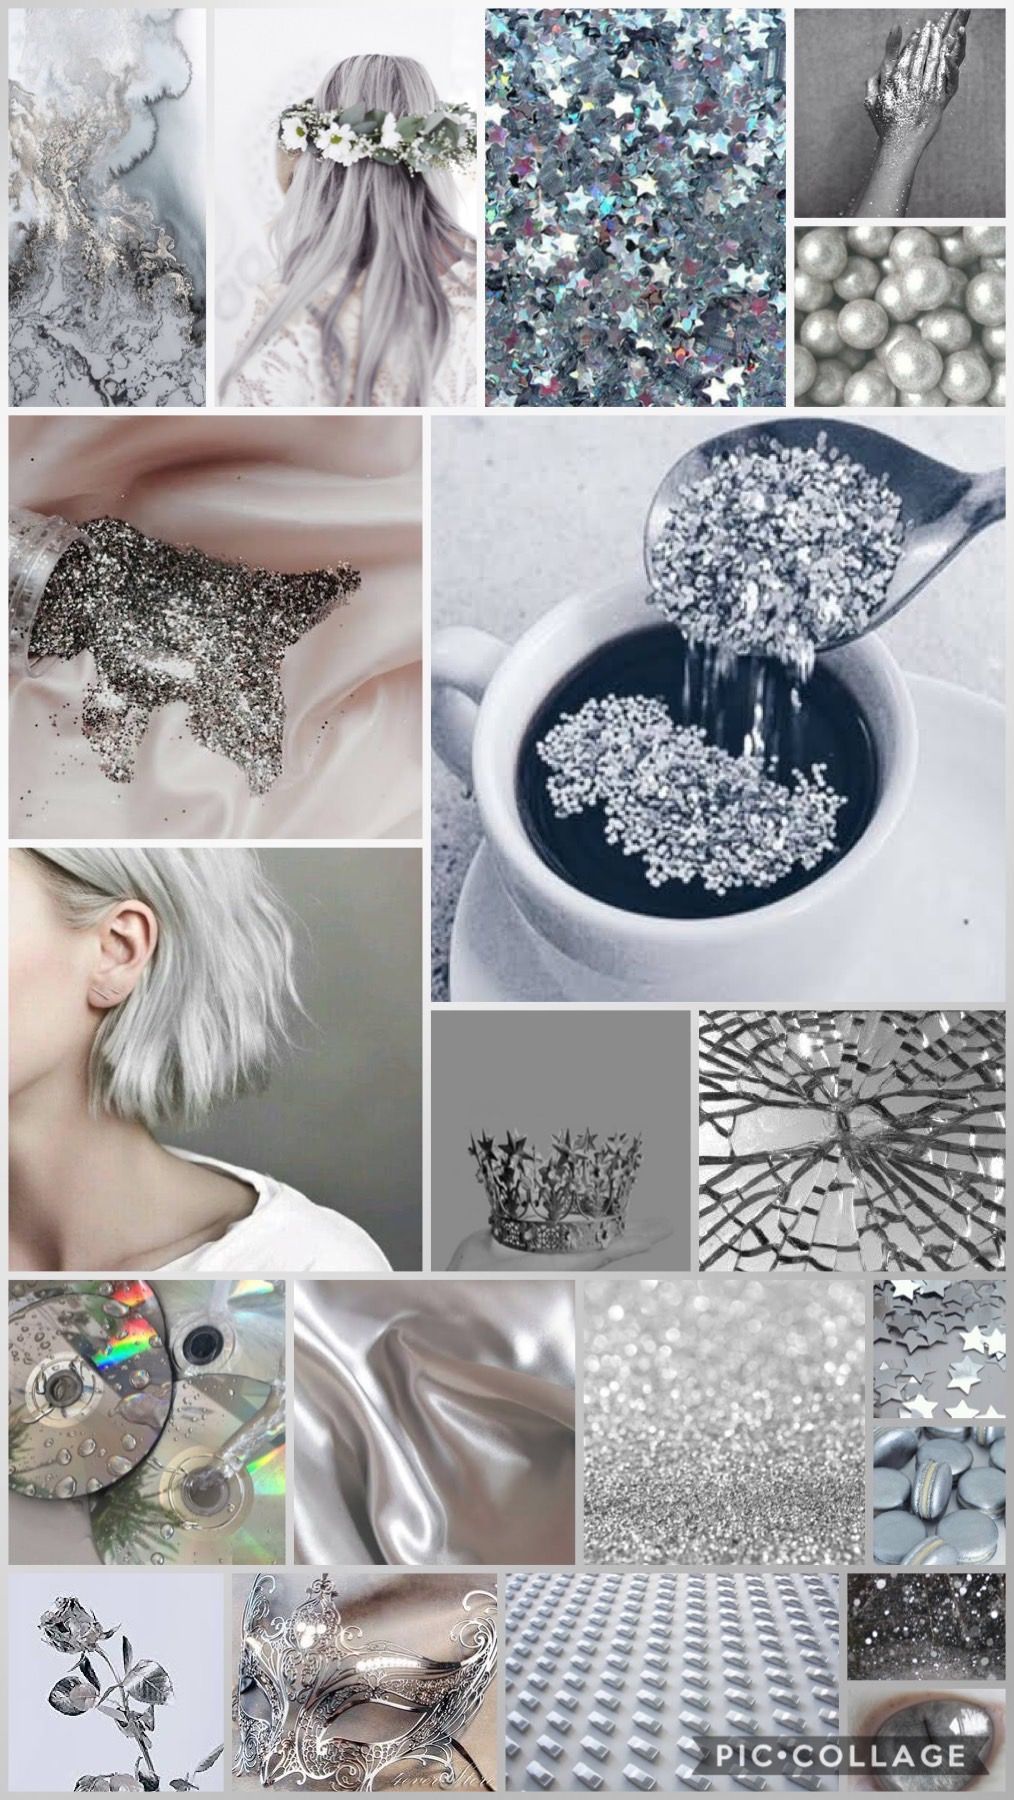 Silver. Instagram aesthetic, Creative inspiration, Feminine energy